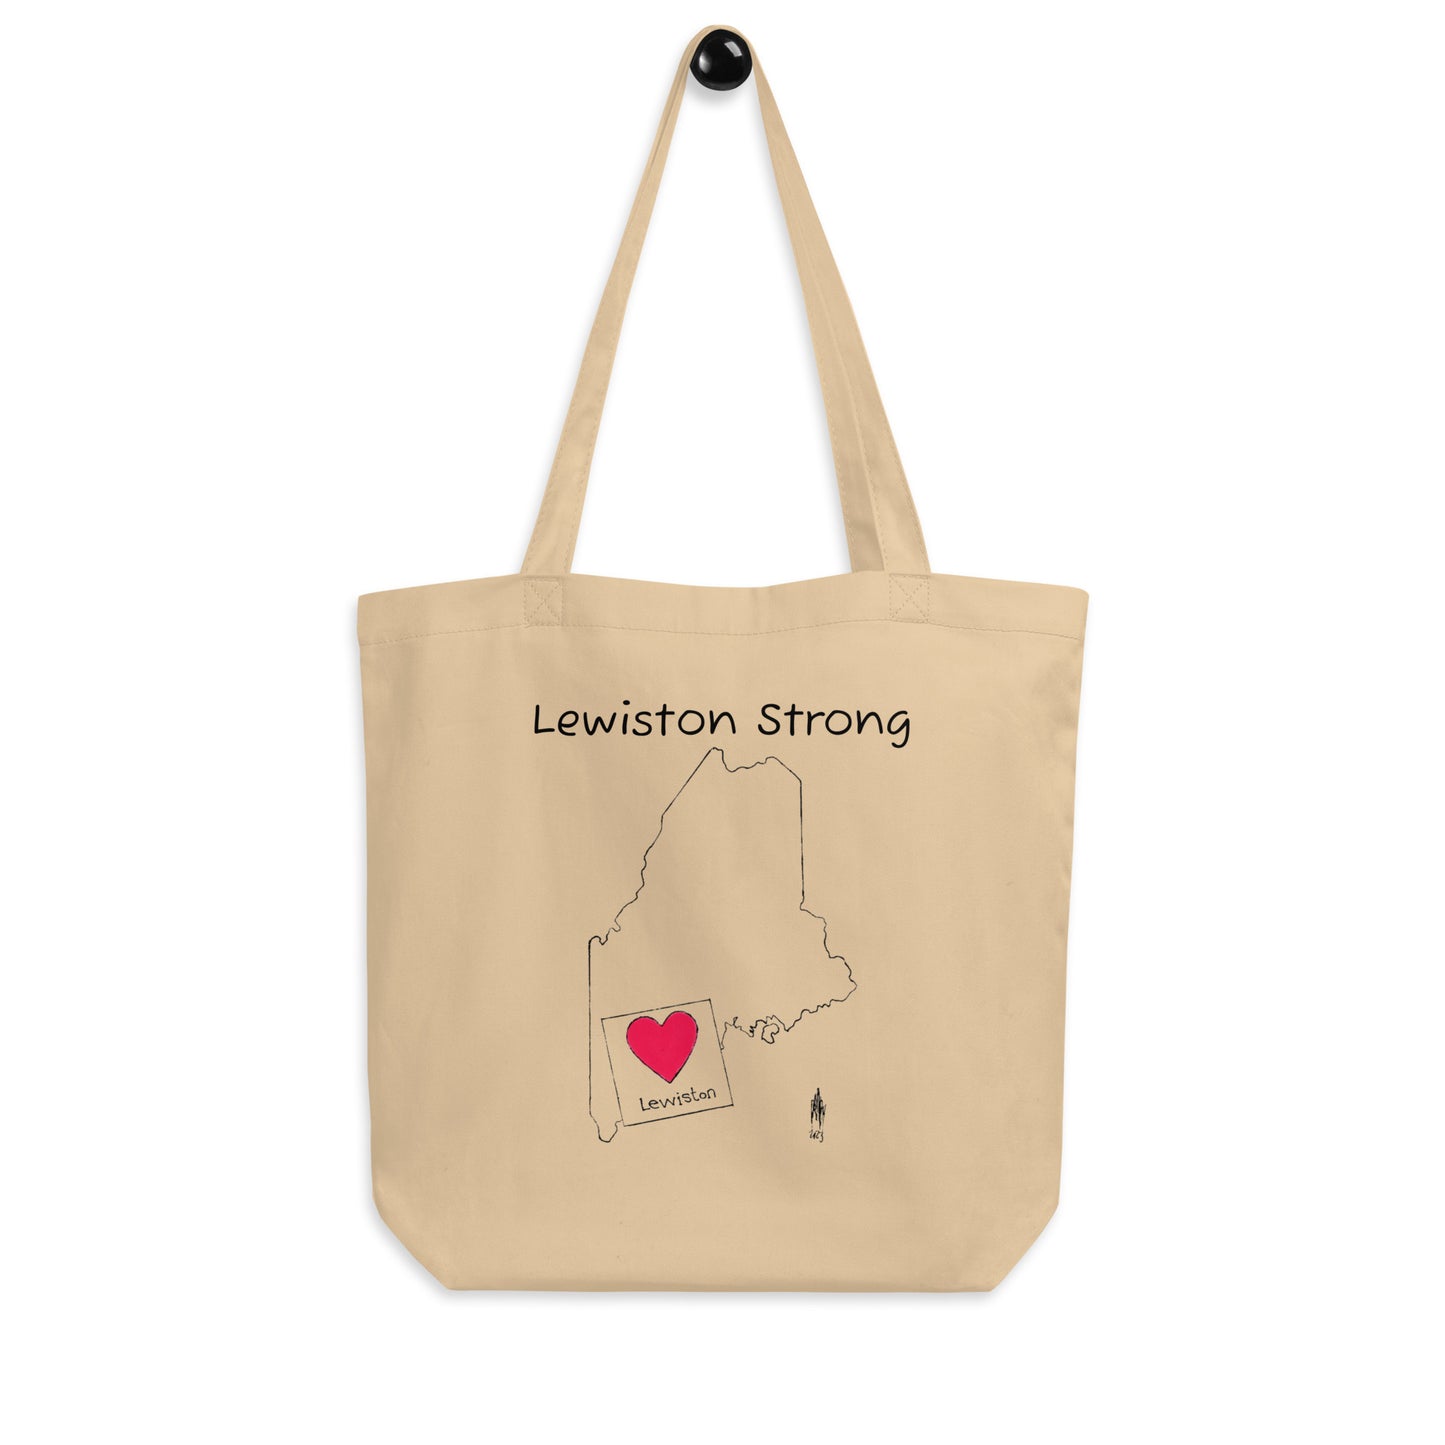 Lewiston Strong Eco Tote Bag